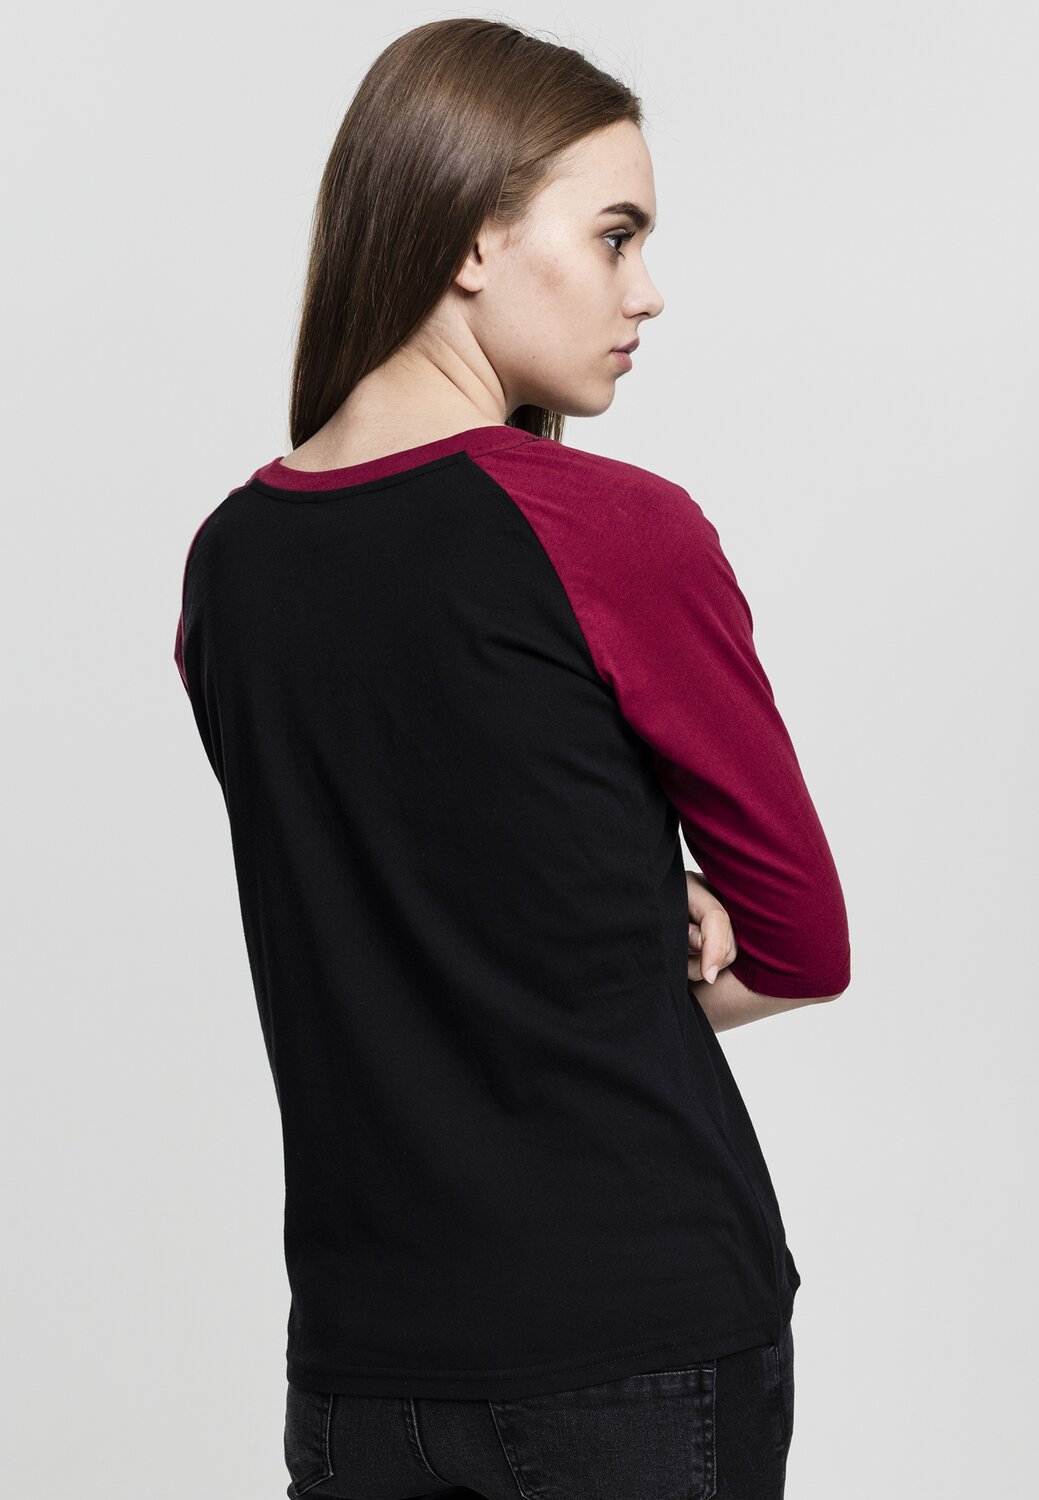 T-Shirt black/burgundy MAXISCOOT 3/4 Contrast | Ladies Raglan